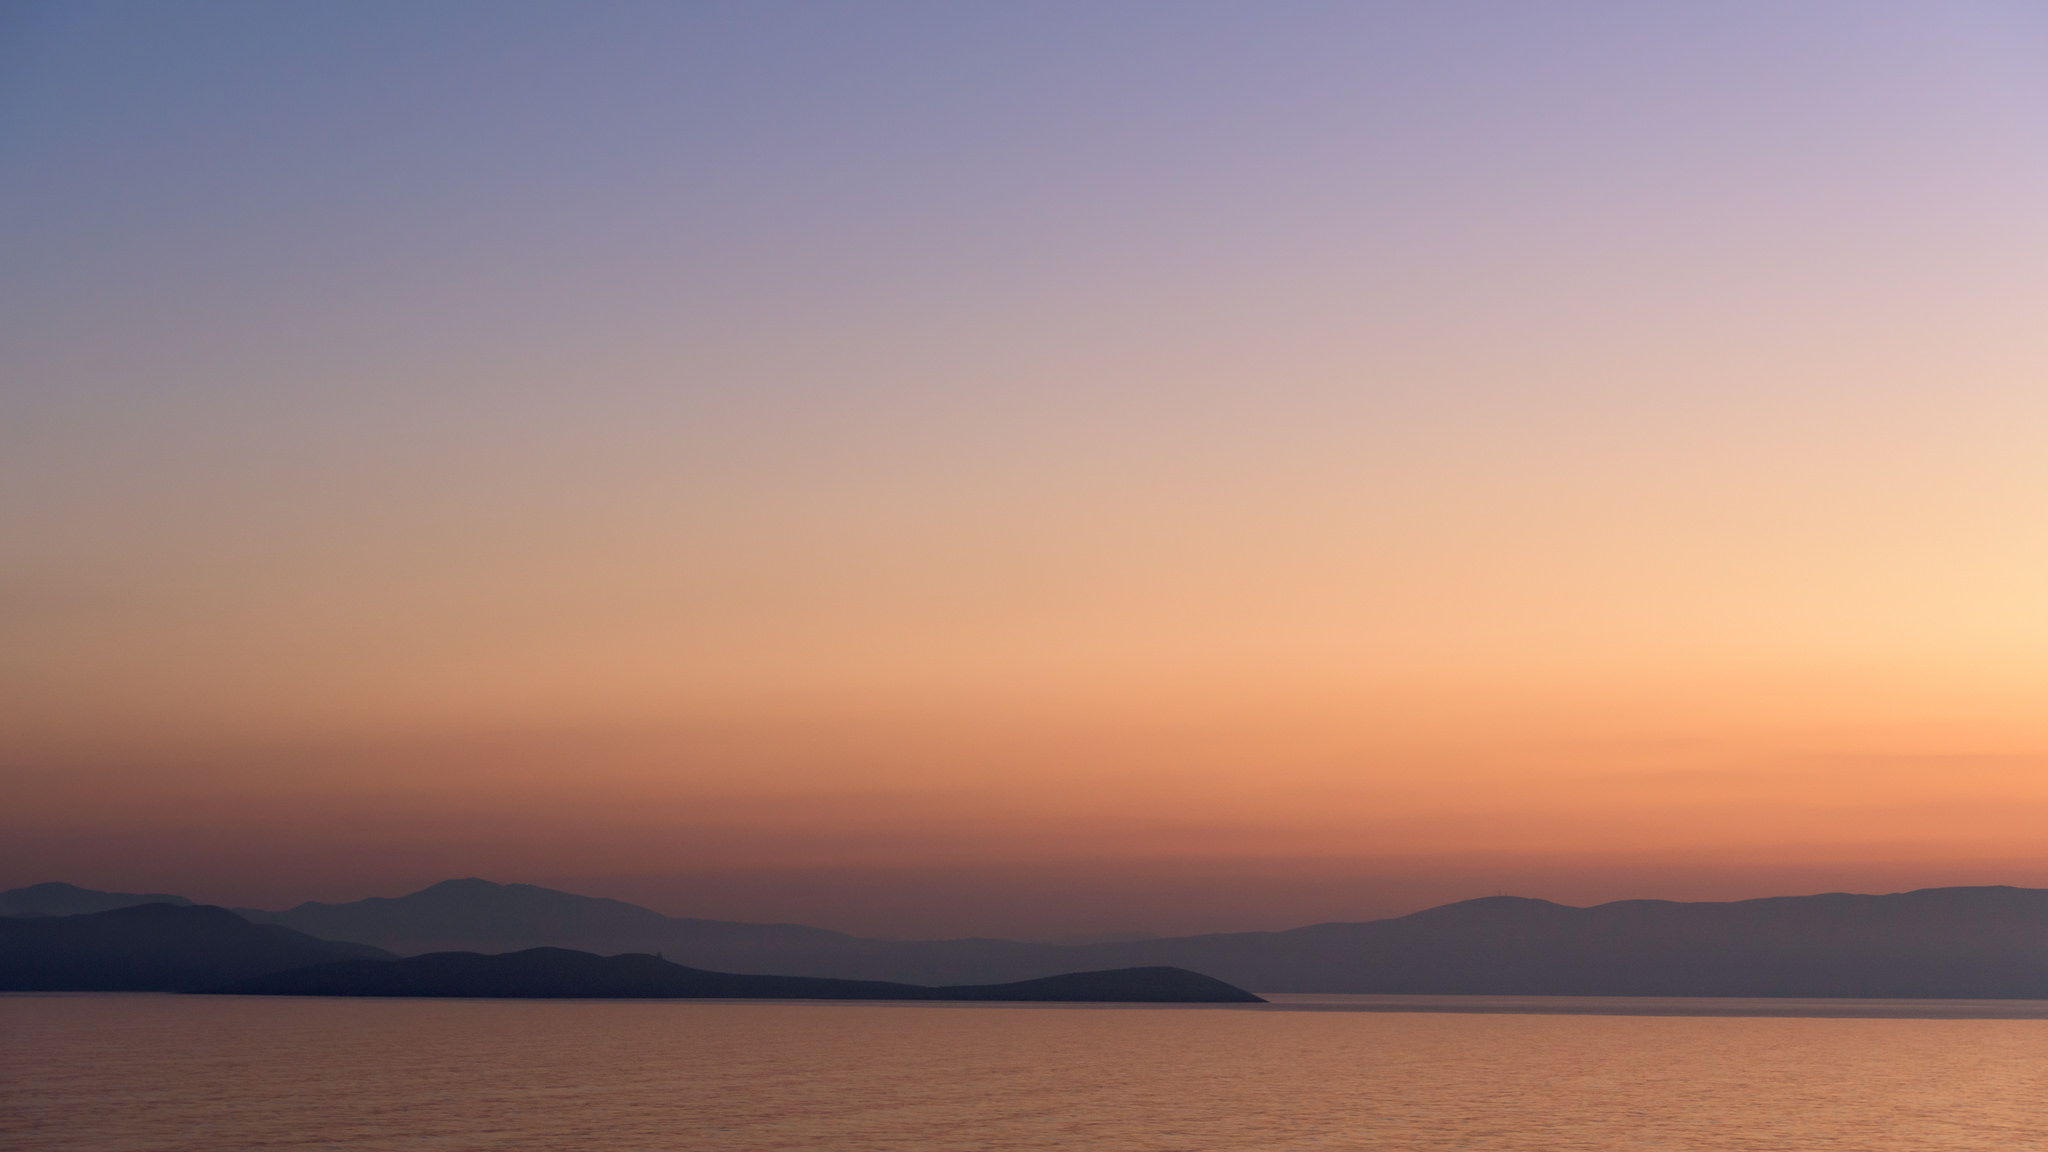 Sunrise in Greece by Joe deSousa